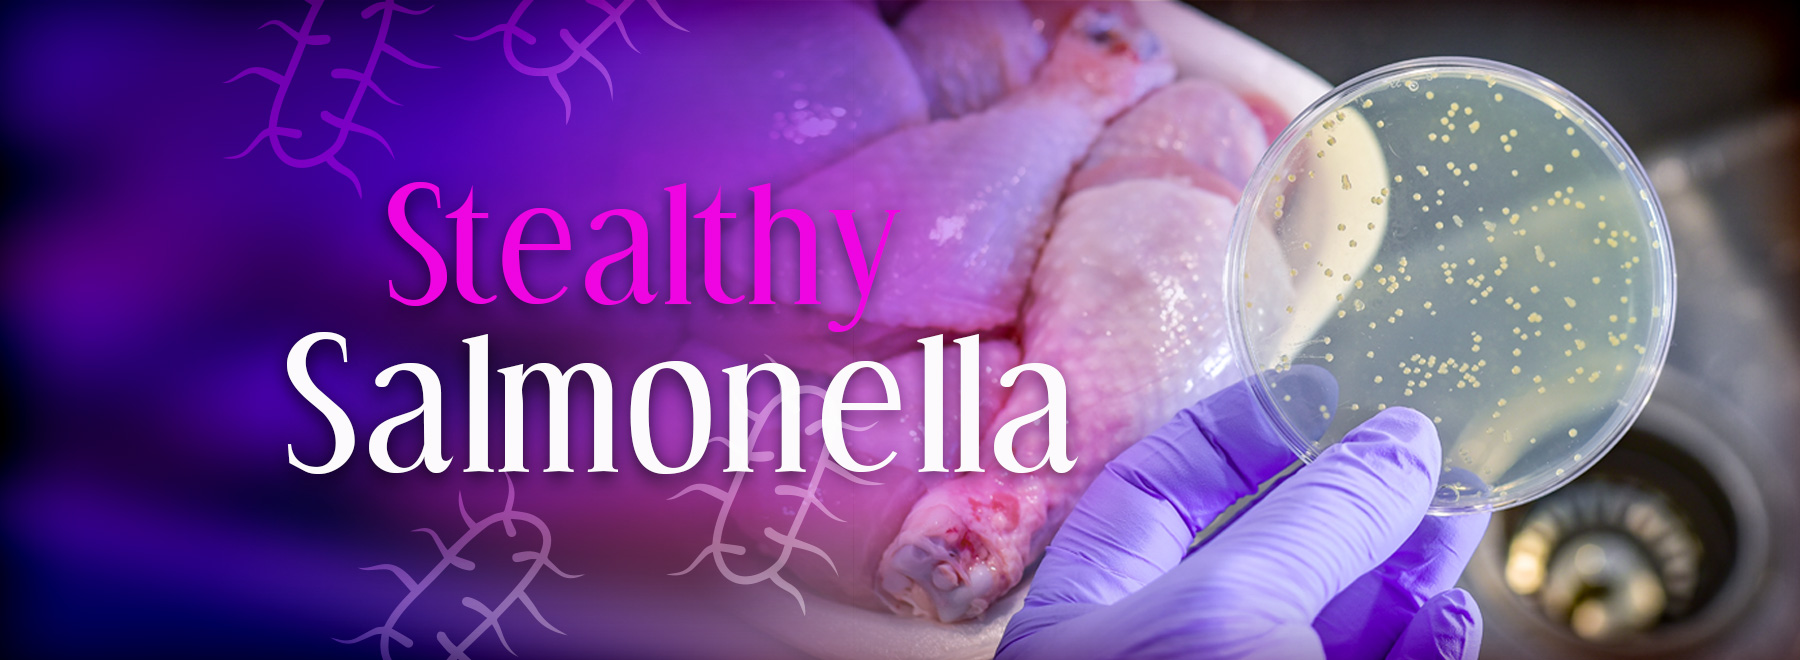 Salmonella photo illustration of raw chicken and a scientist hand holding a petri dish with salmonella